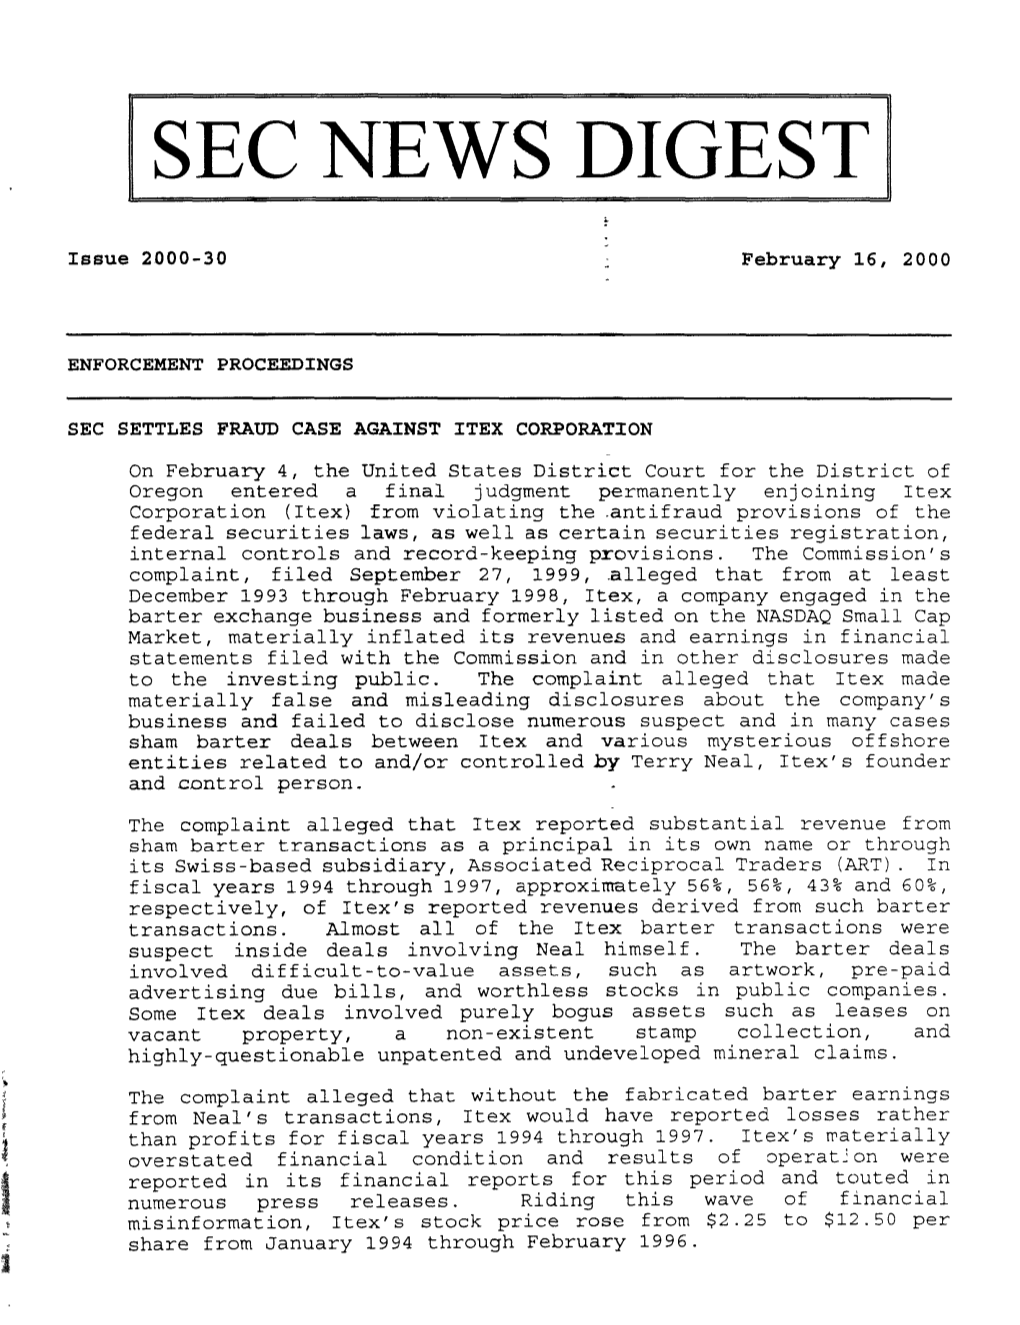 SEC News Digest, 02-16-2000